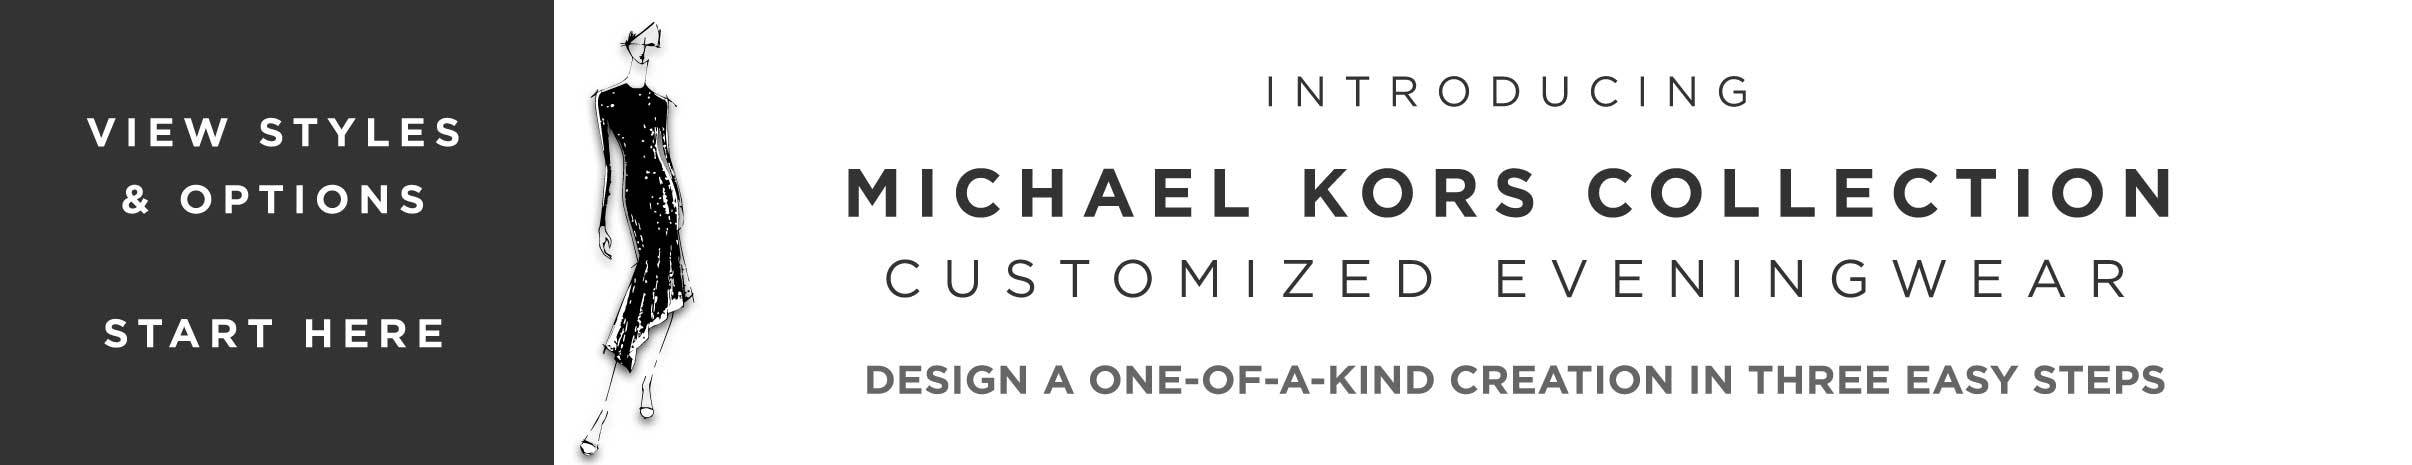 Michael Kors Collection Customized Eveningwear